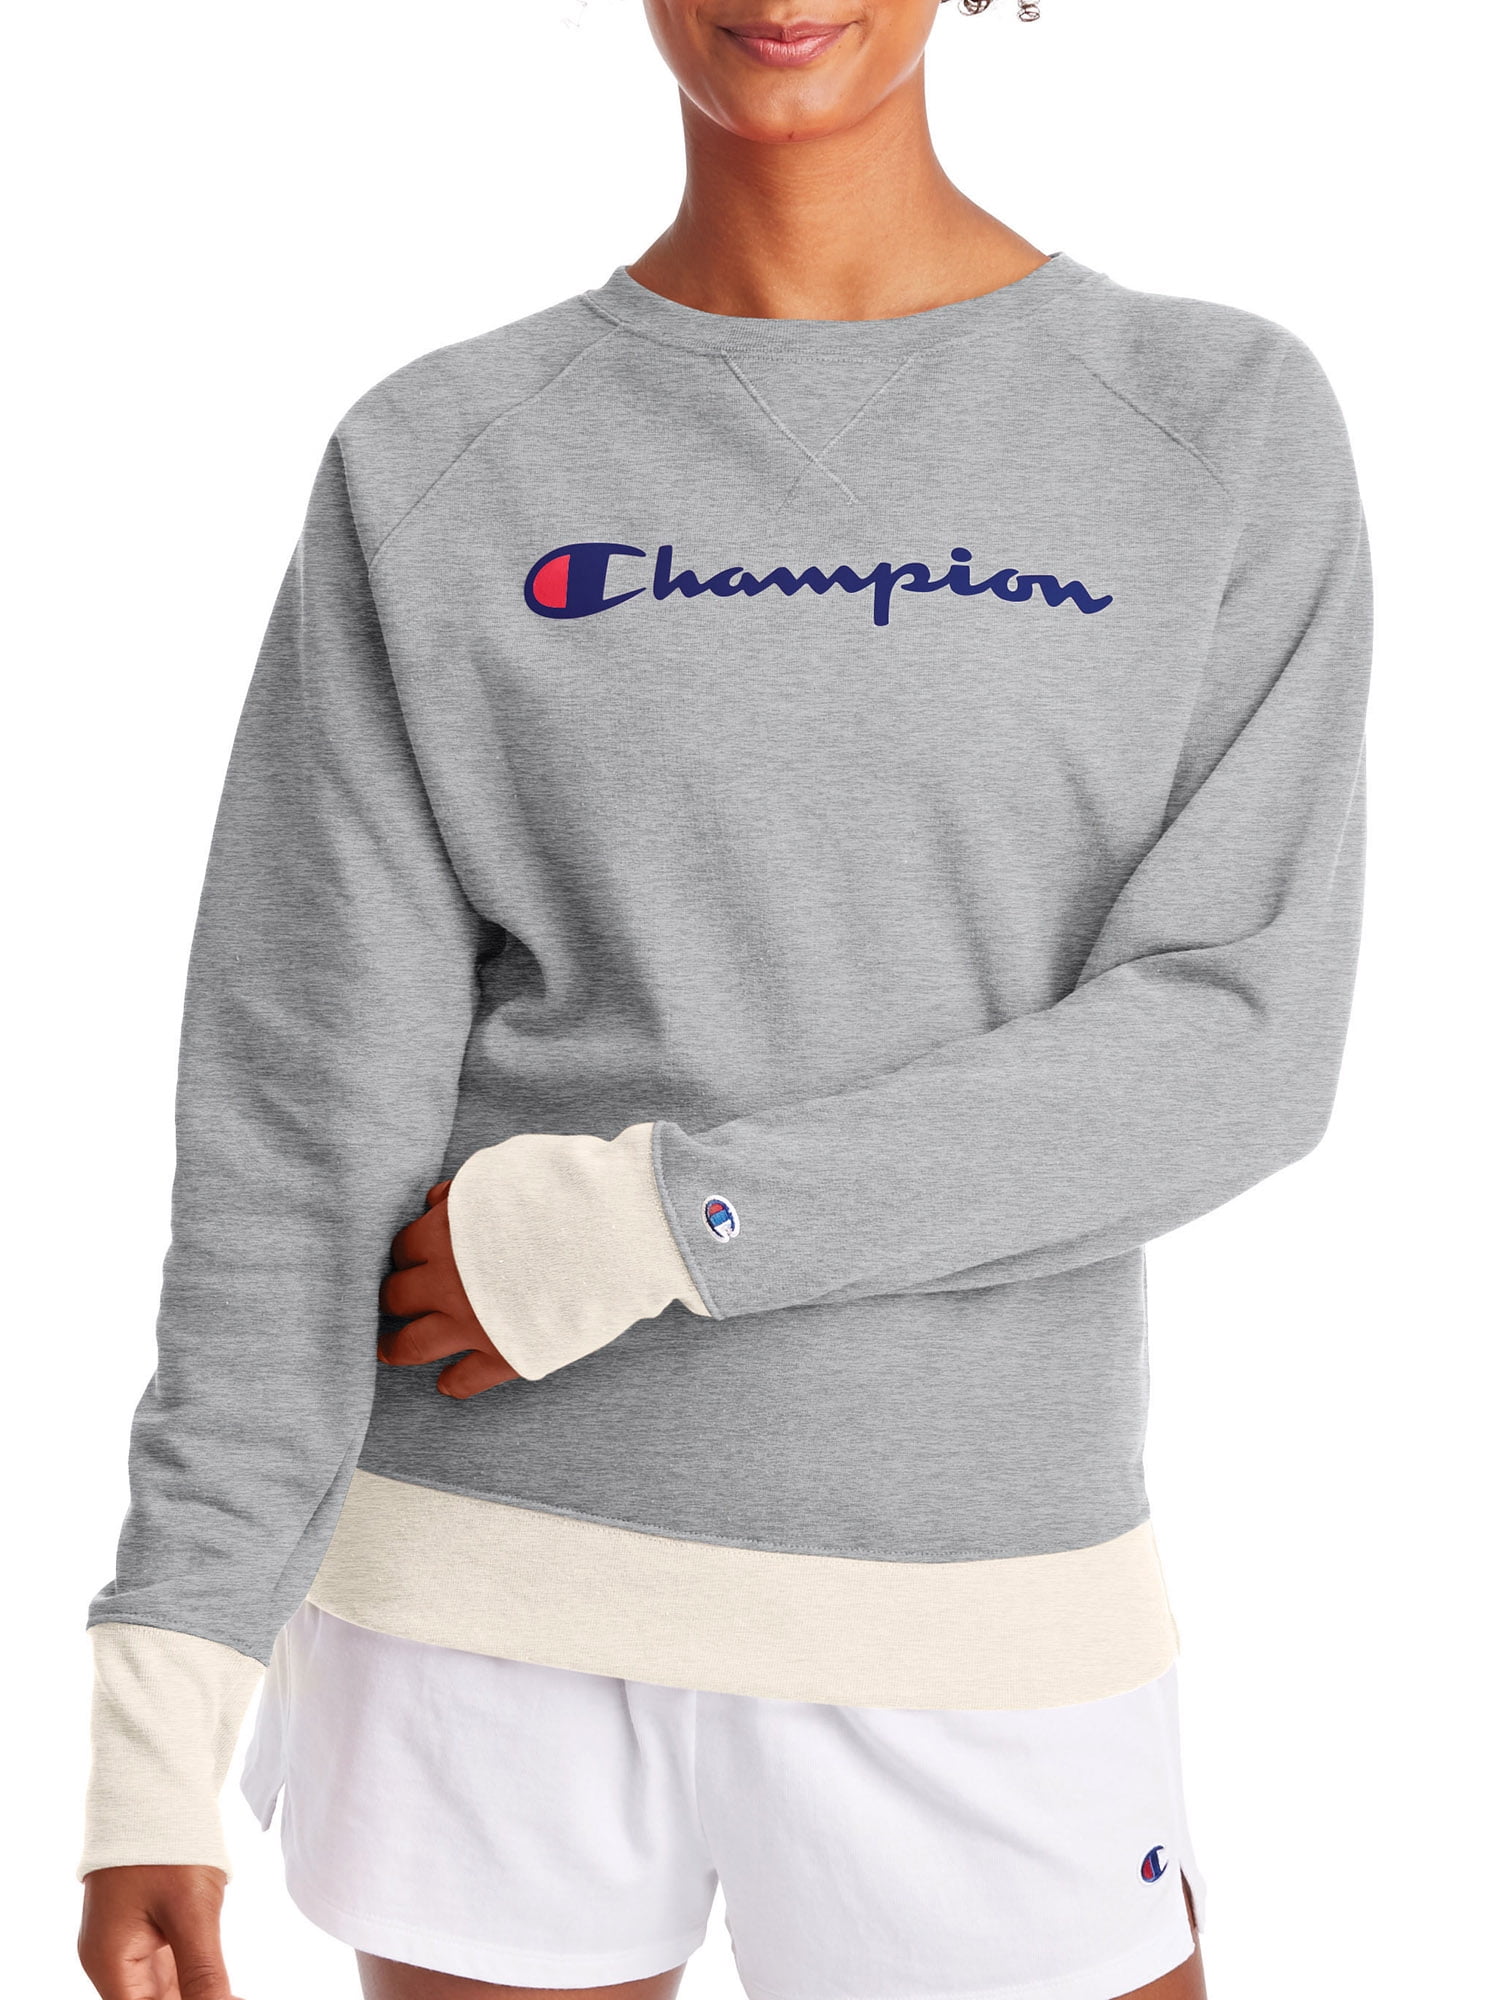 champion jumper womens grey